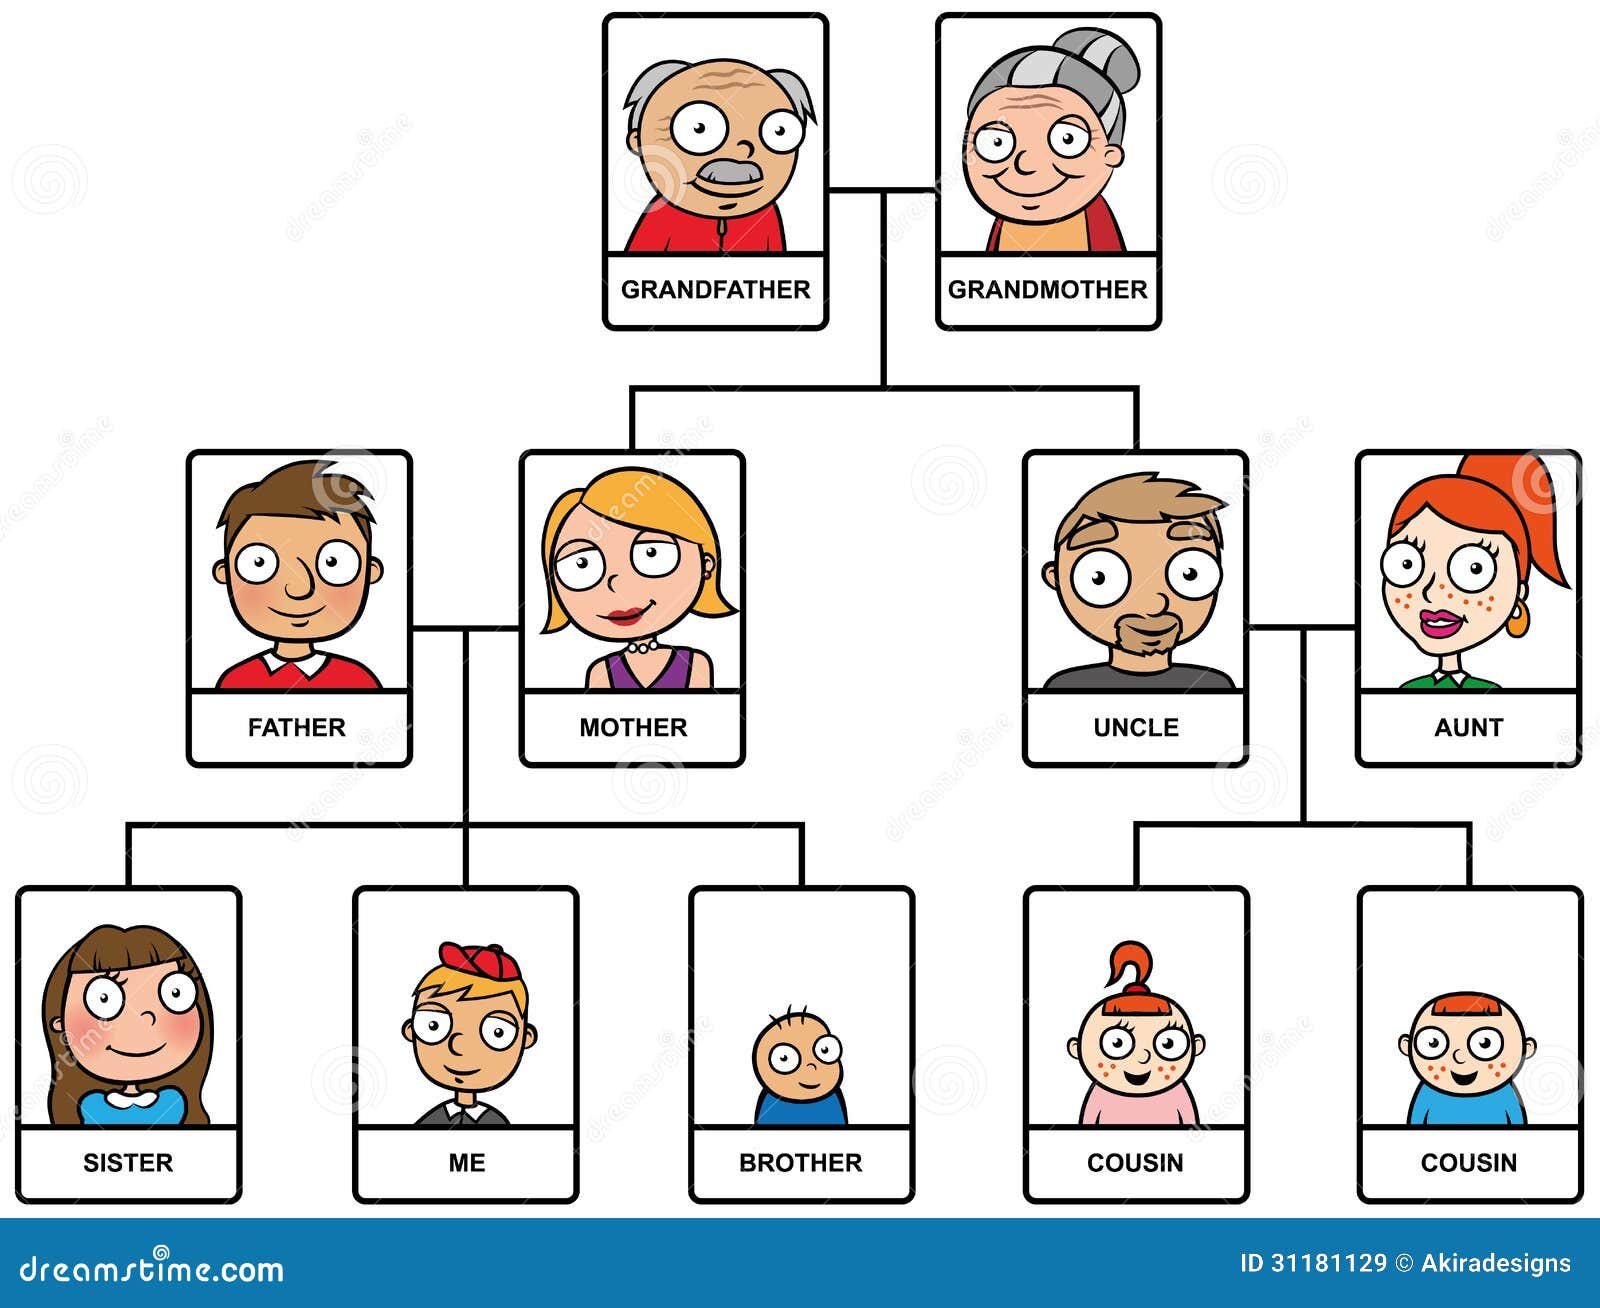 family tree clip art download - photo #29